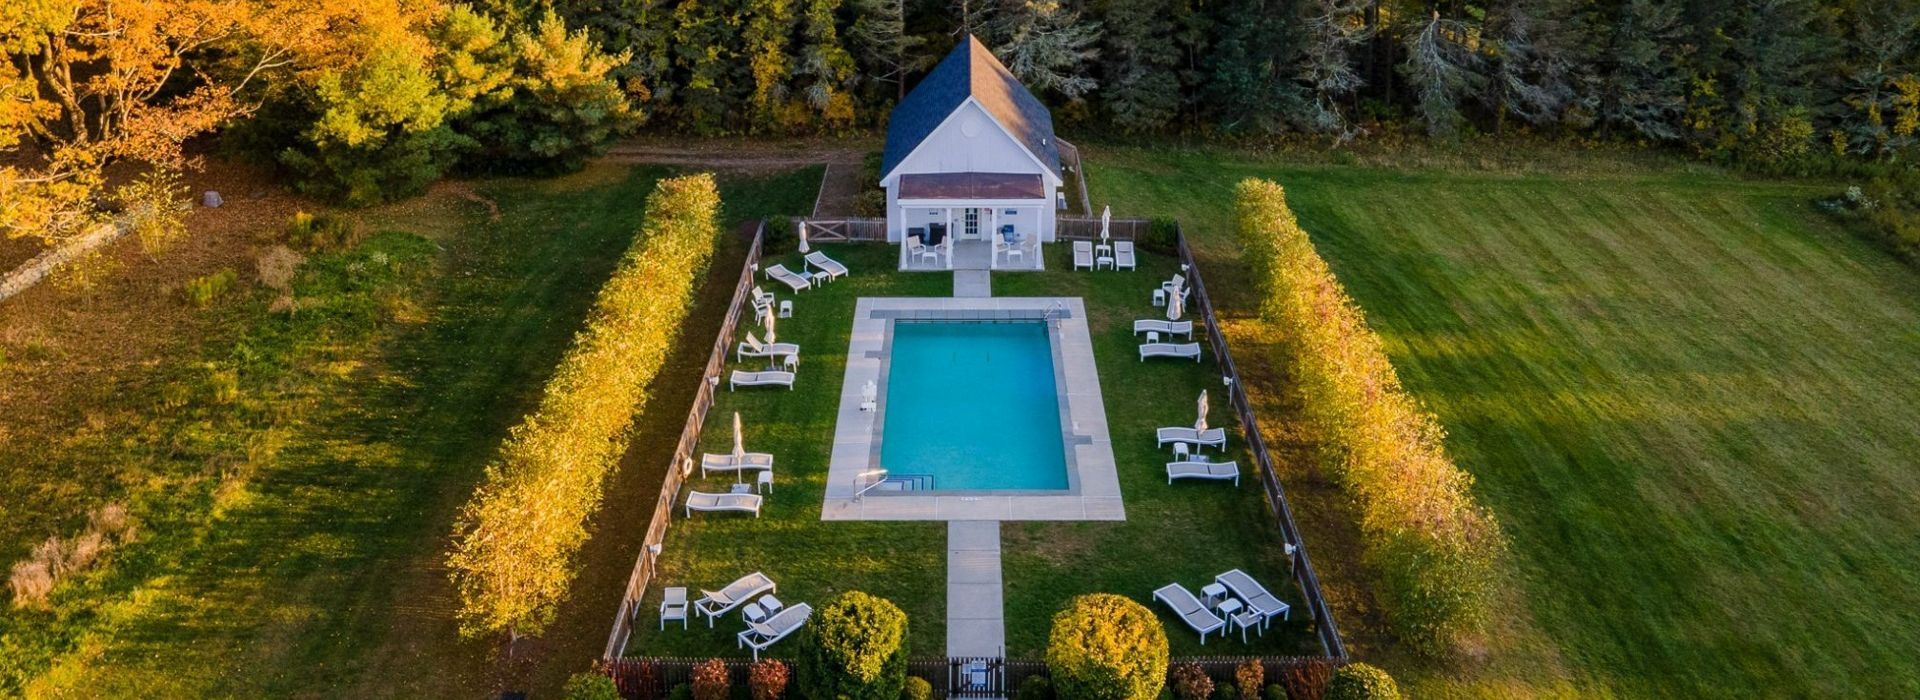 winvian-farm-spa-pool-house-aerial.jpg